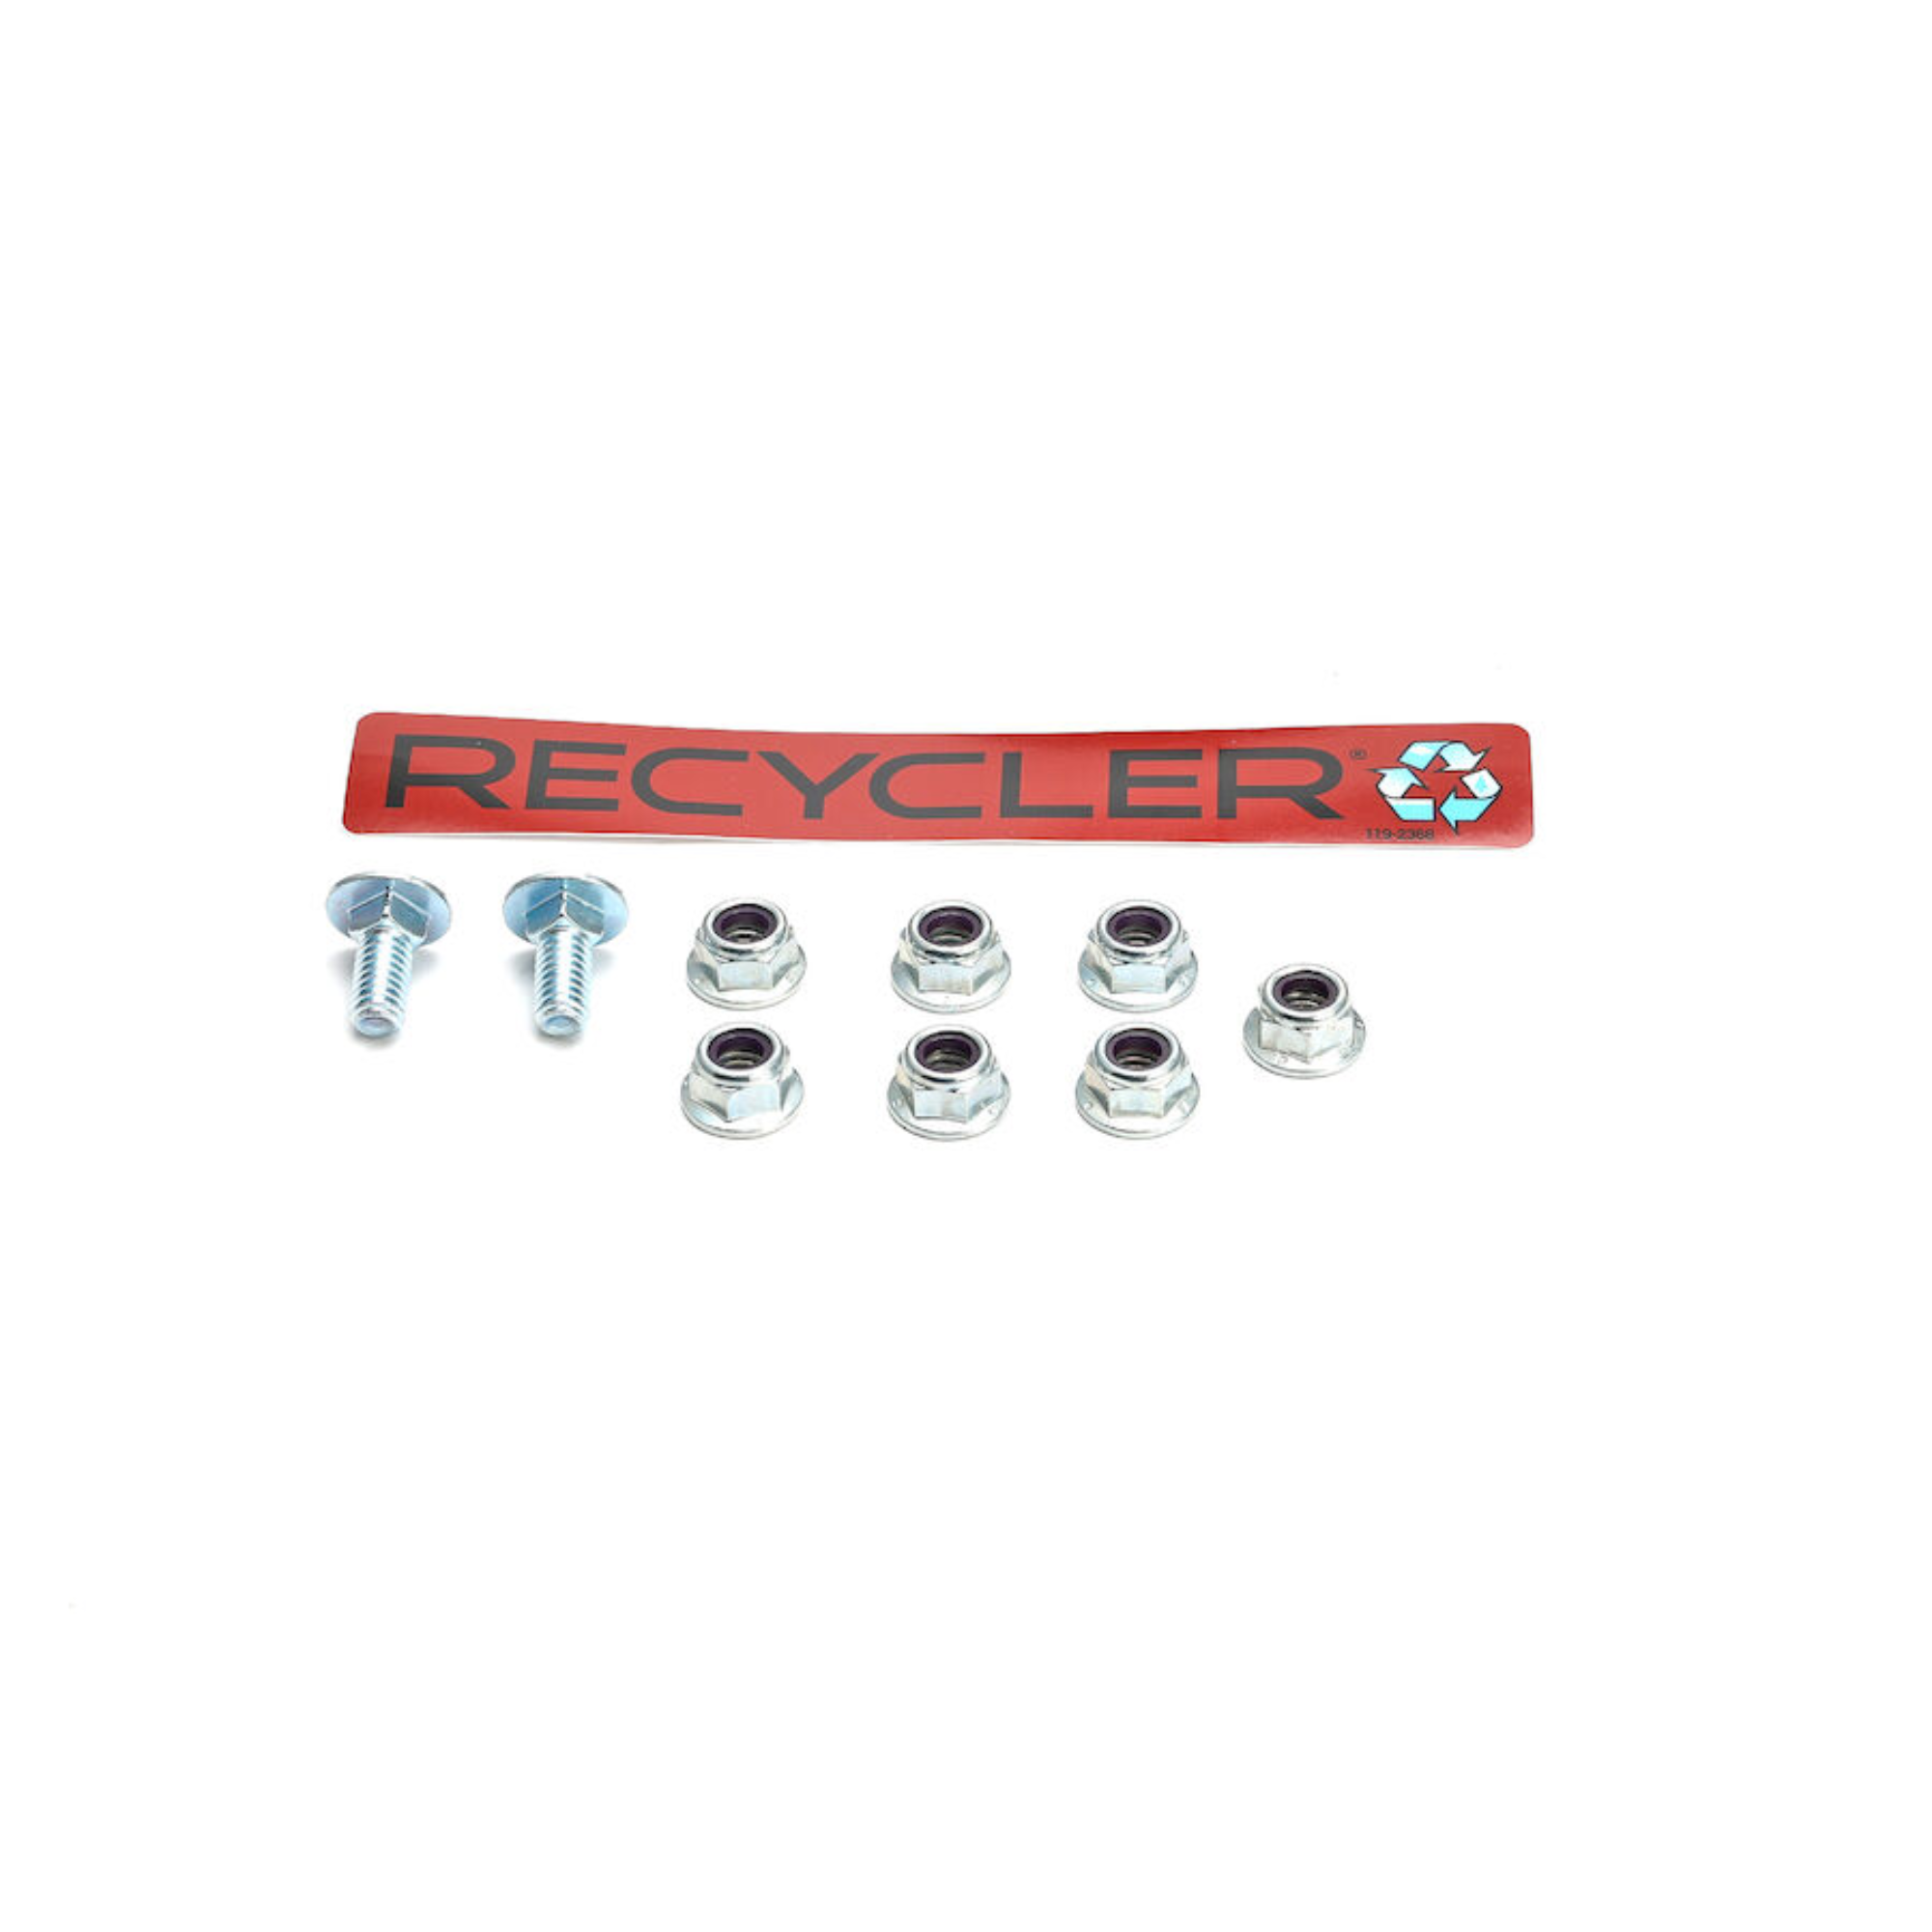 Toro 55 inch TimeCutter Recycler Mulch Kit | 139-3240